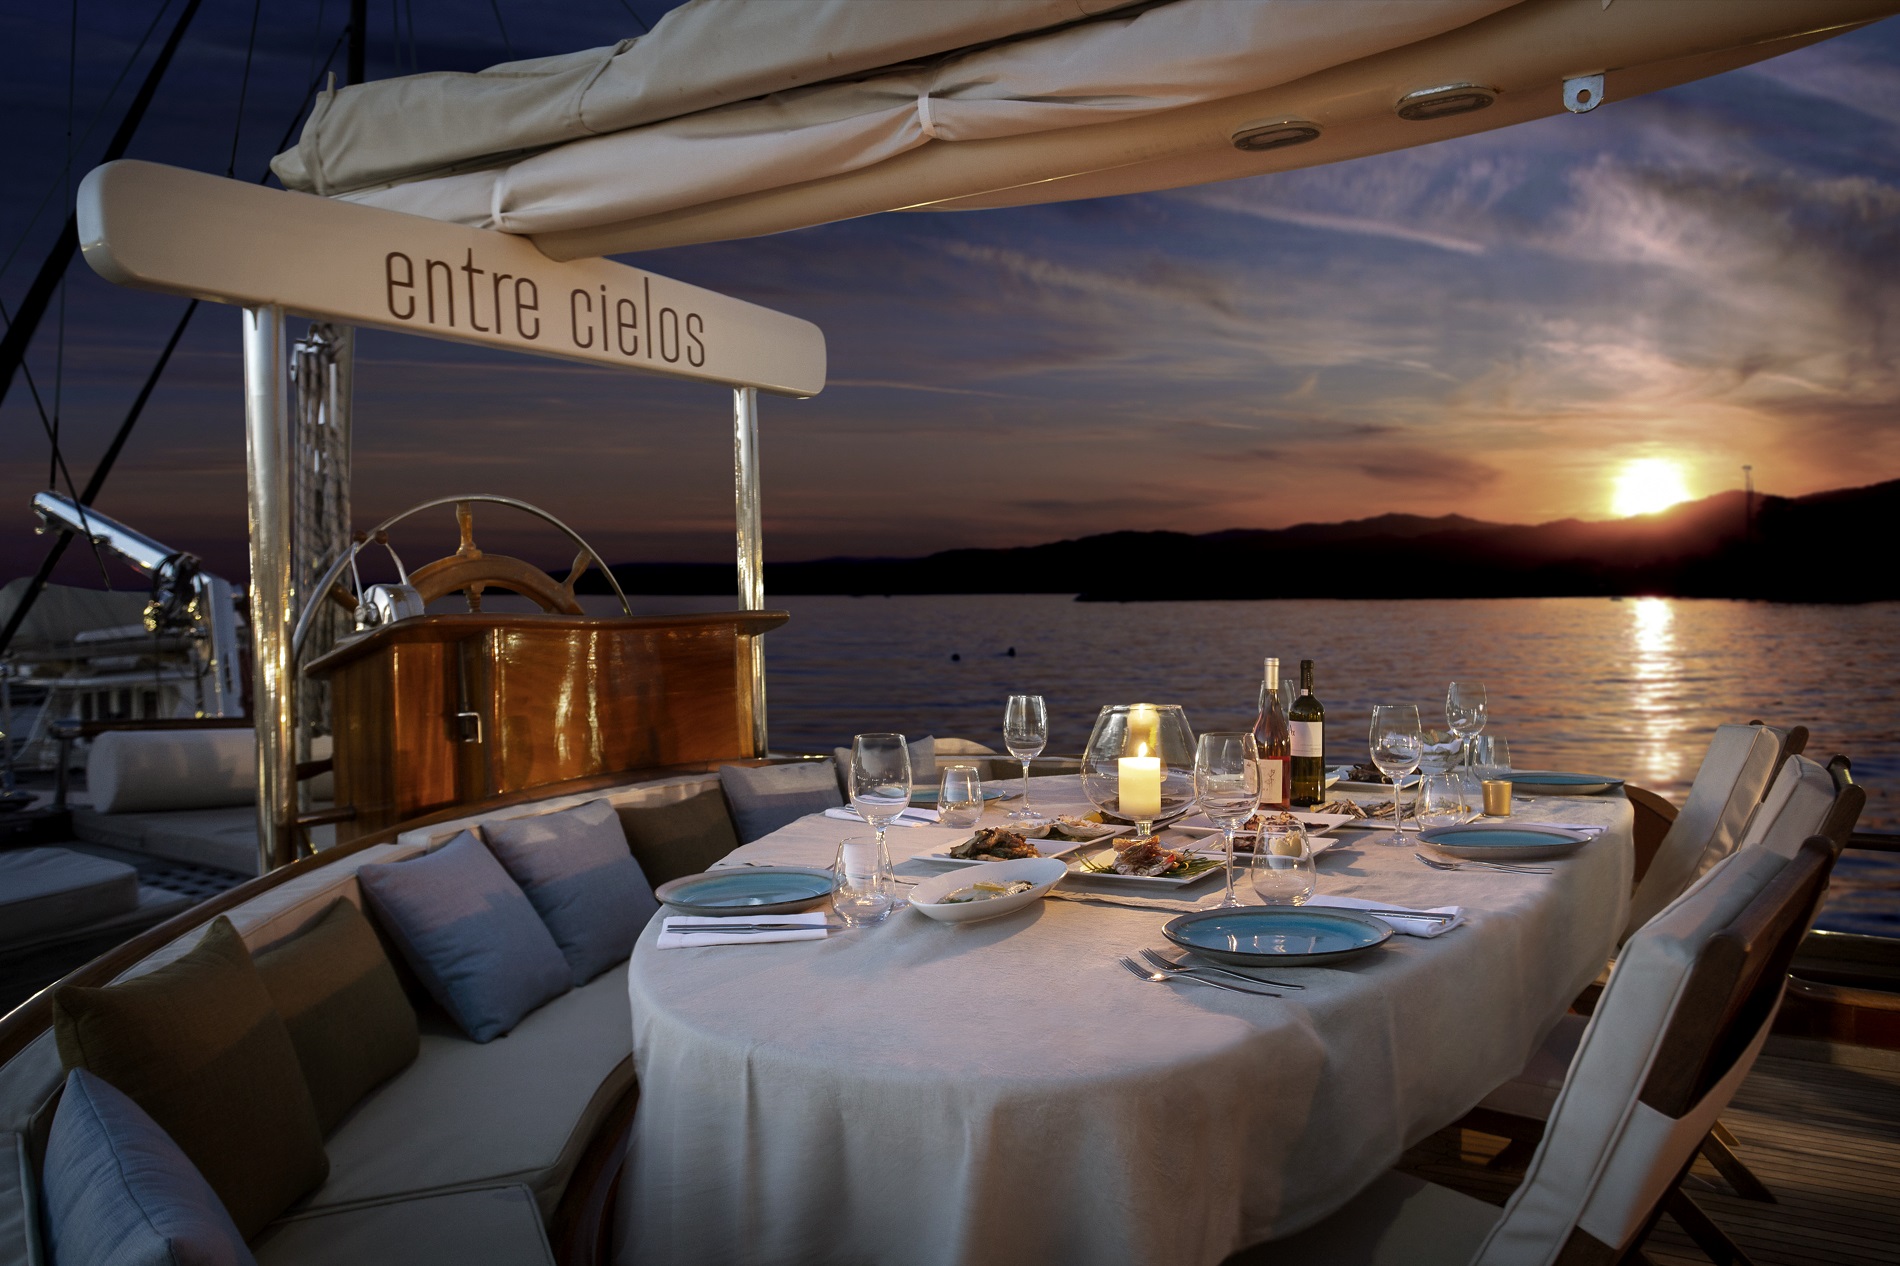 Charter yachts greek islands.